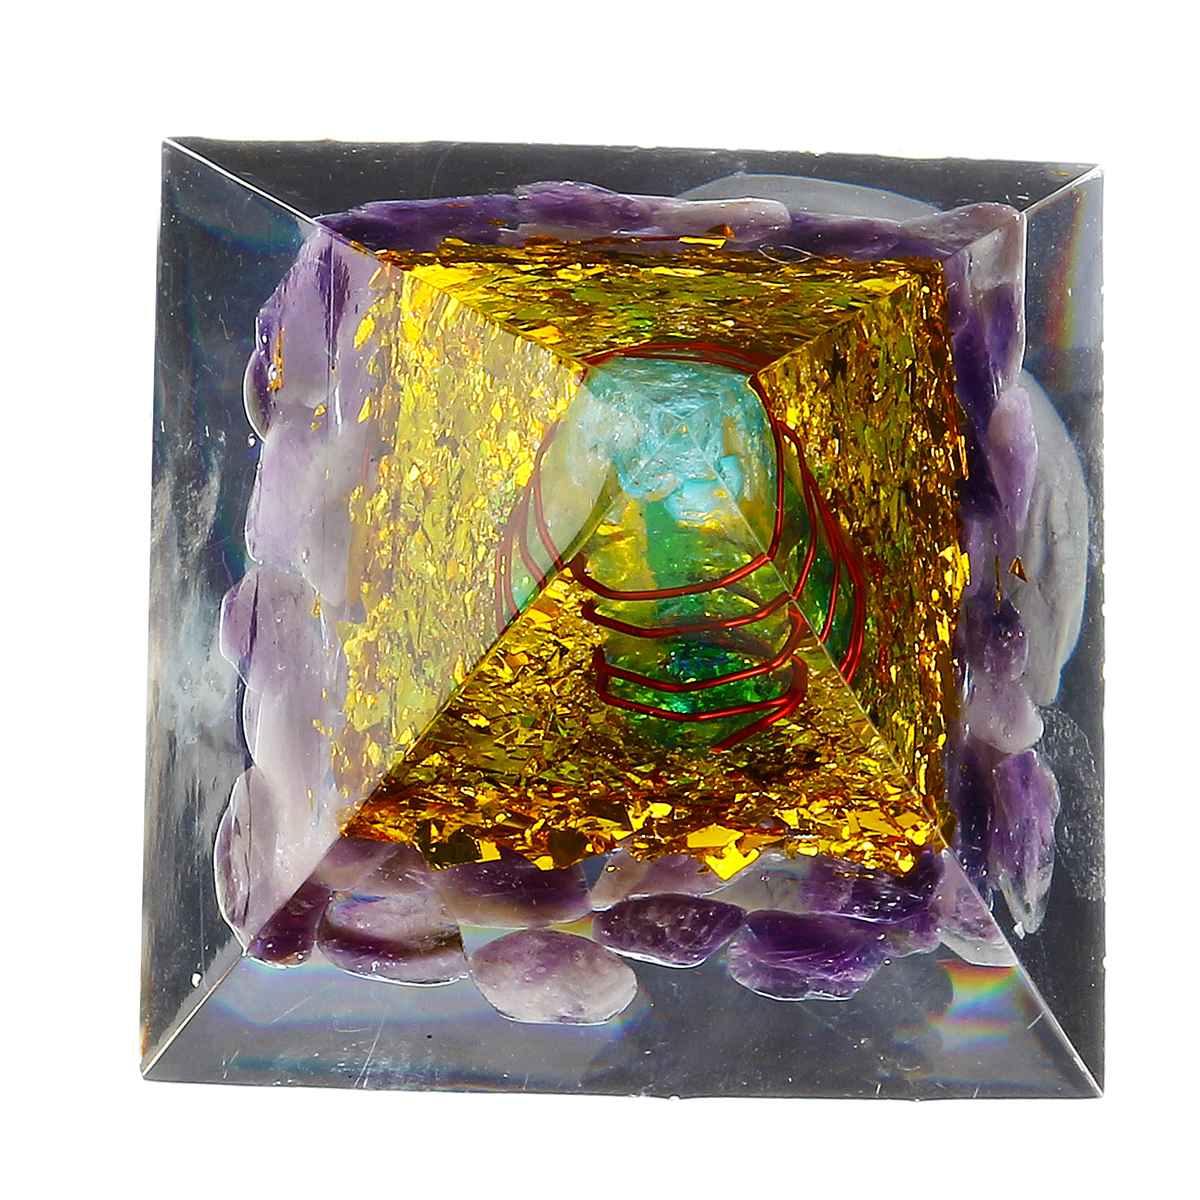 Crystal Amethyst Energy Healing Pyramid - Vianchi Natural Glam